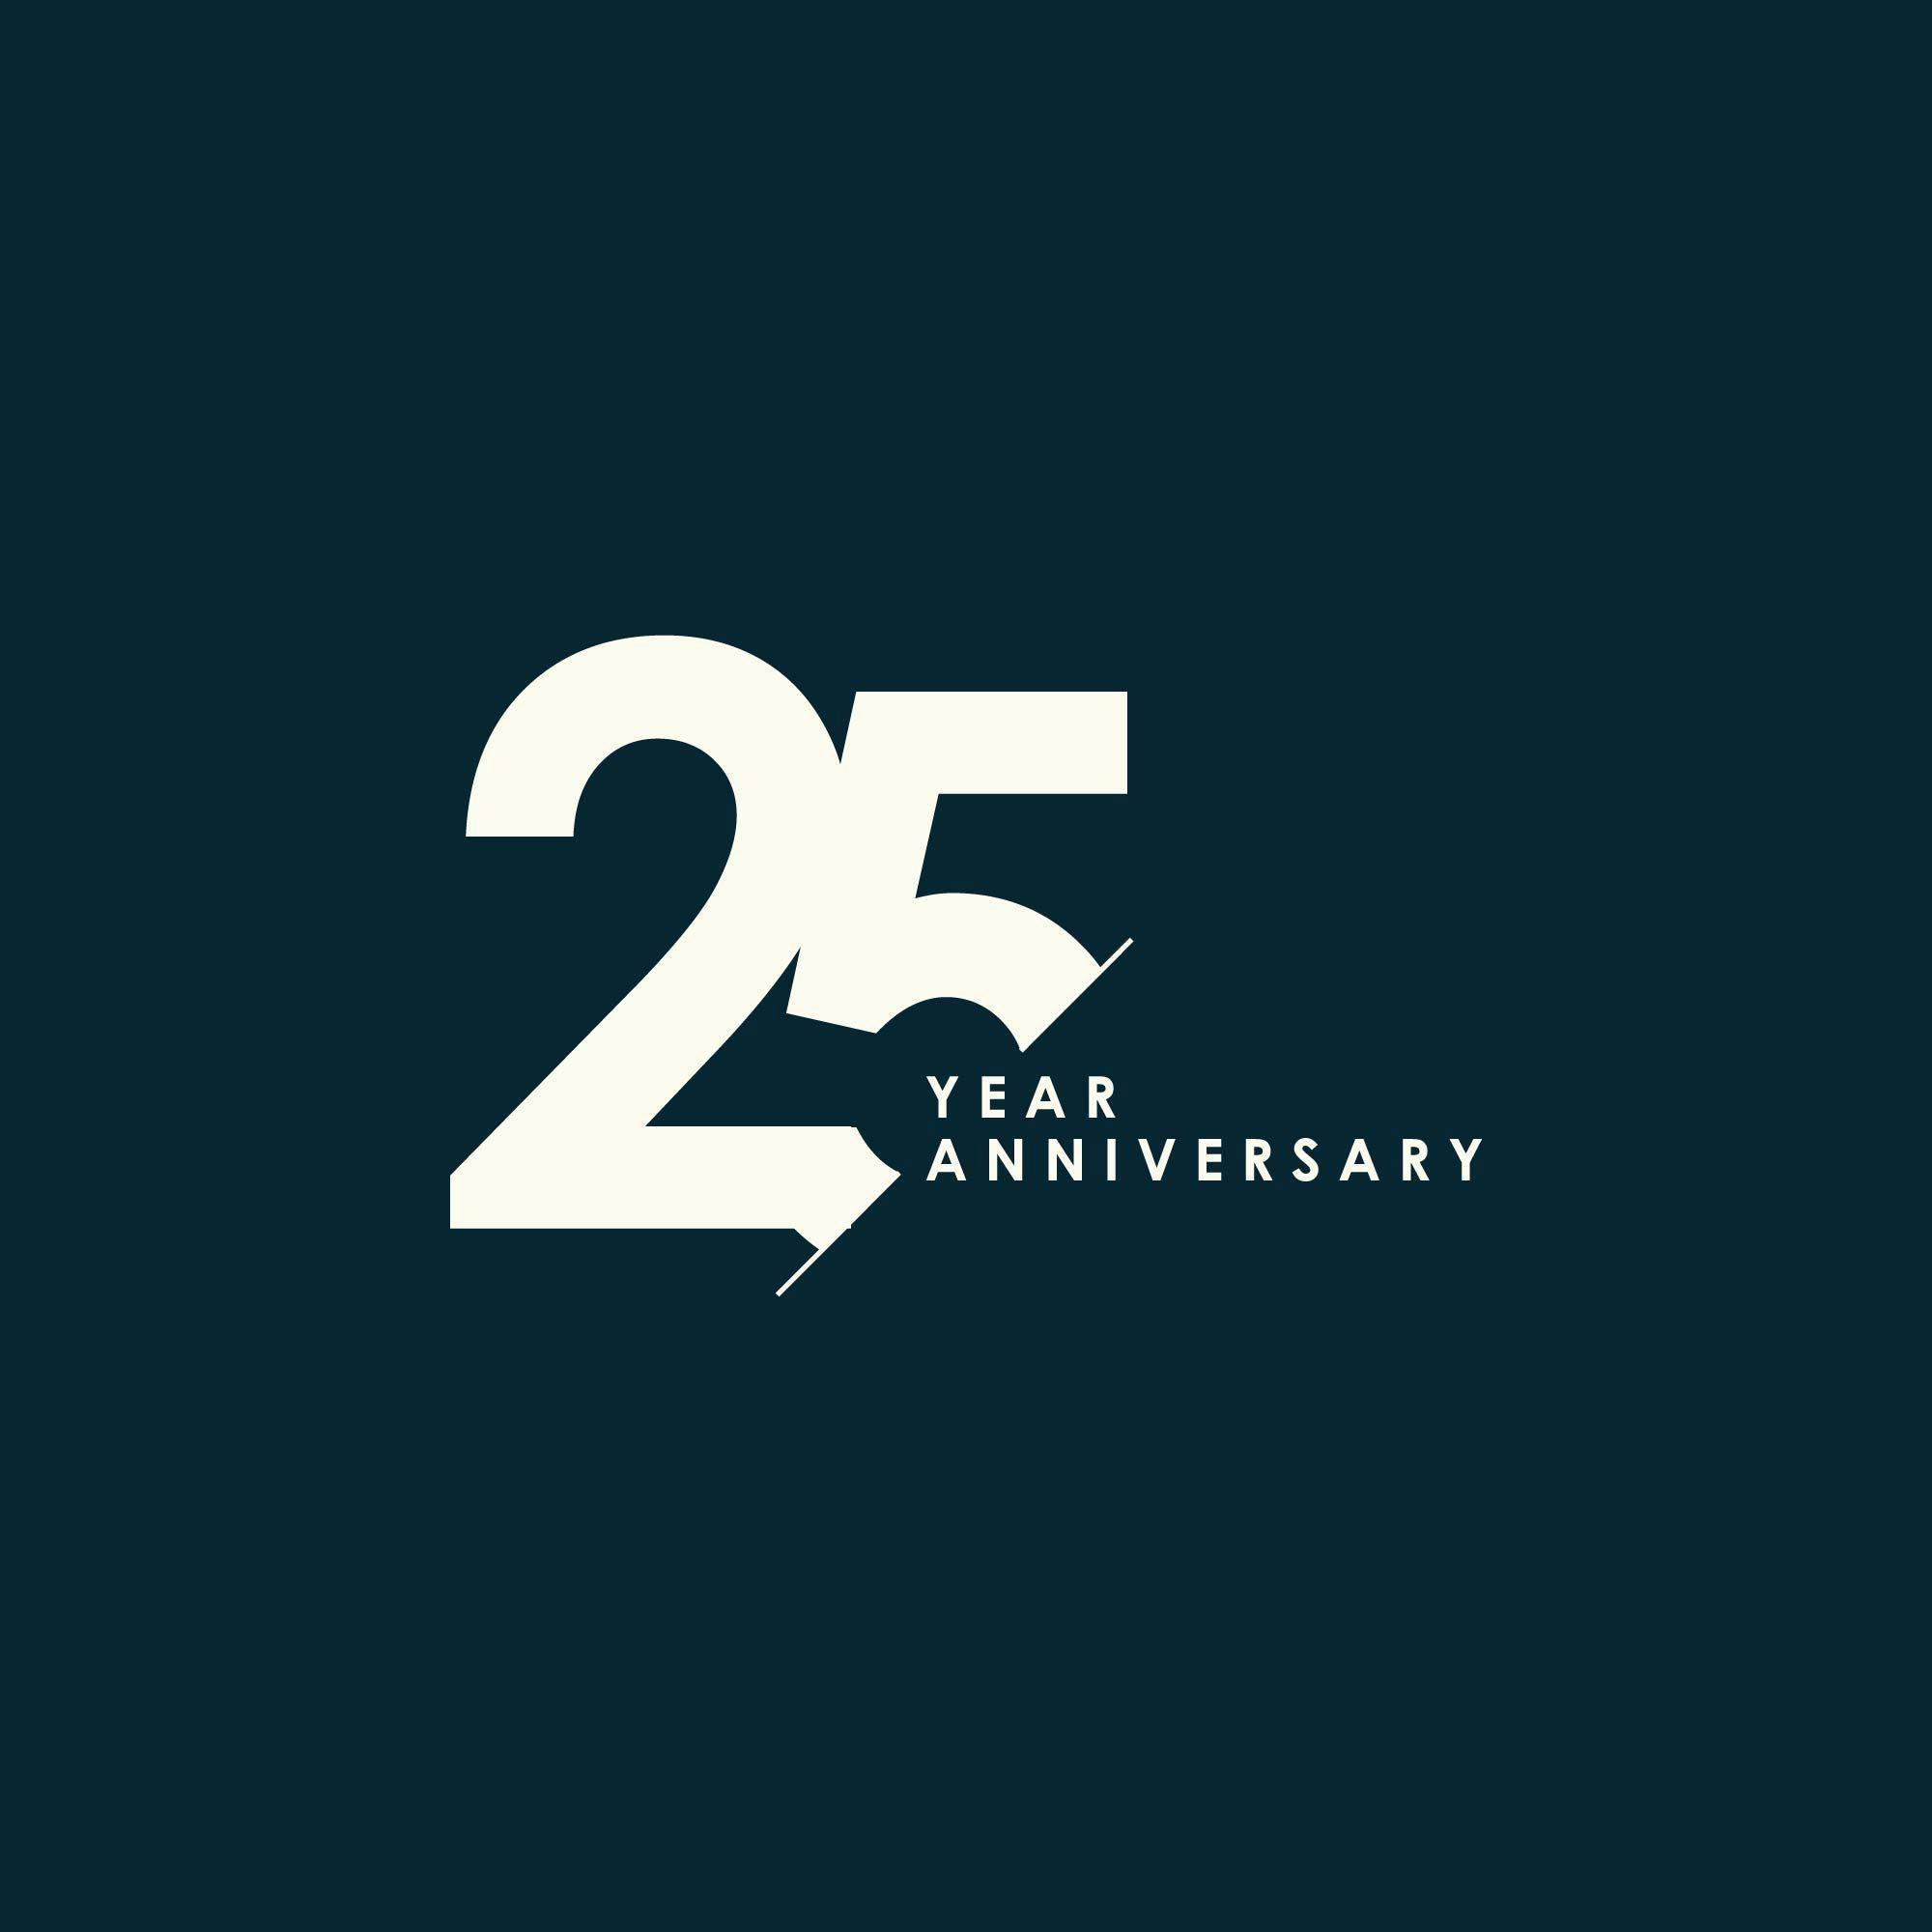 25th anniversary